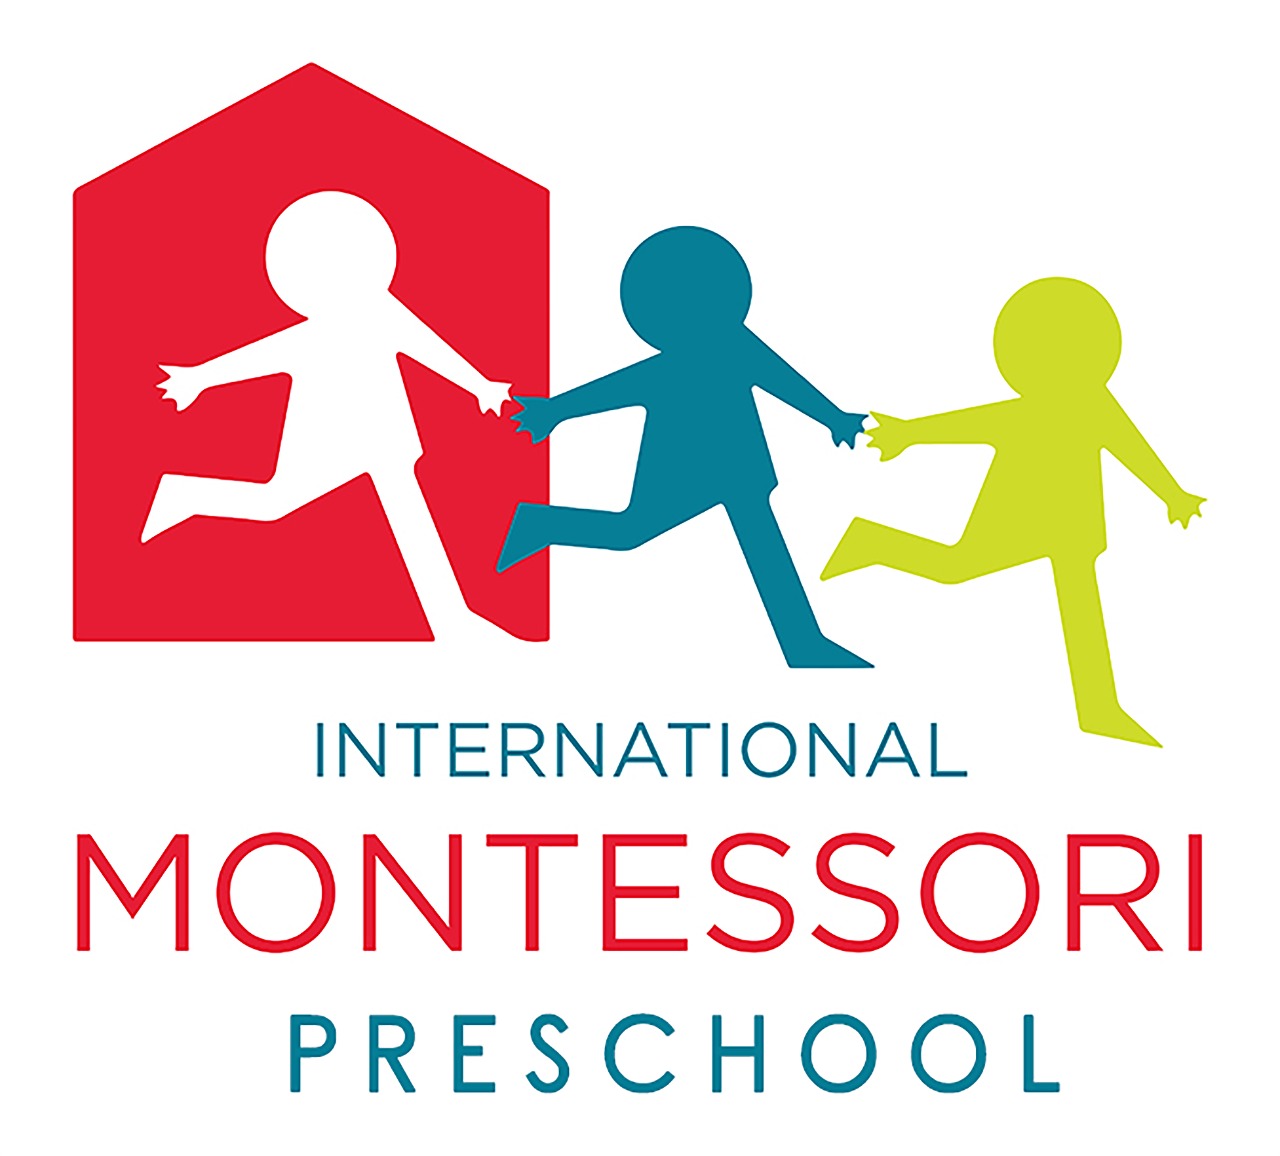 The International Montessori Preschool